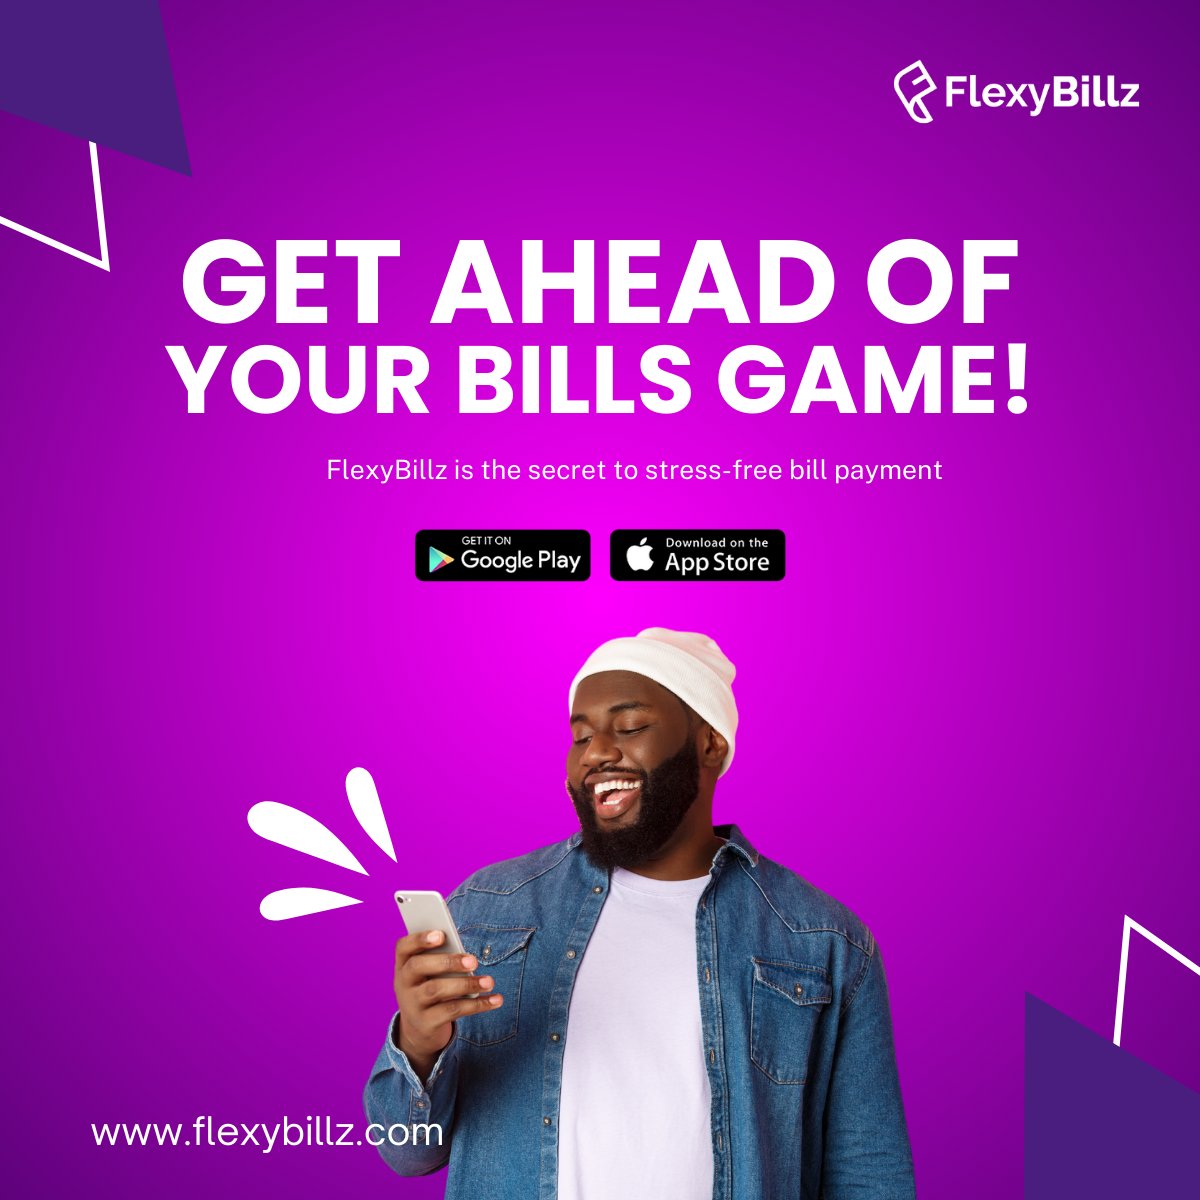 Flexybillz is the secret to a stress-free bill payment.

#airtime #billpaymentservices #bill #payment #lagos #nigeria #flex